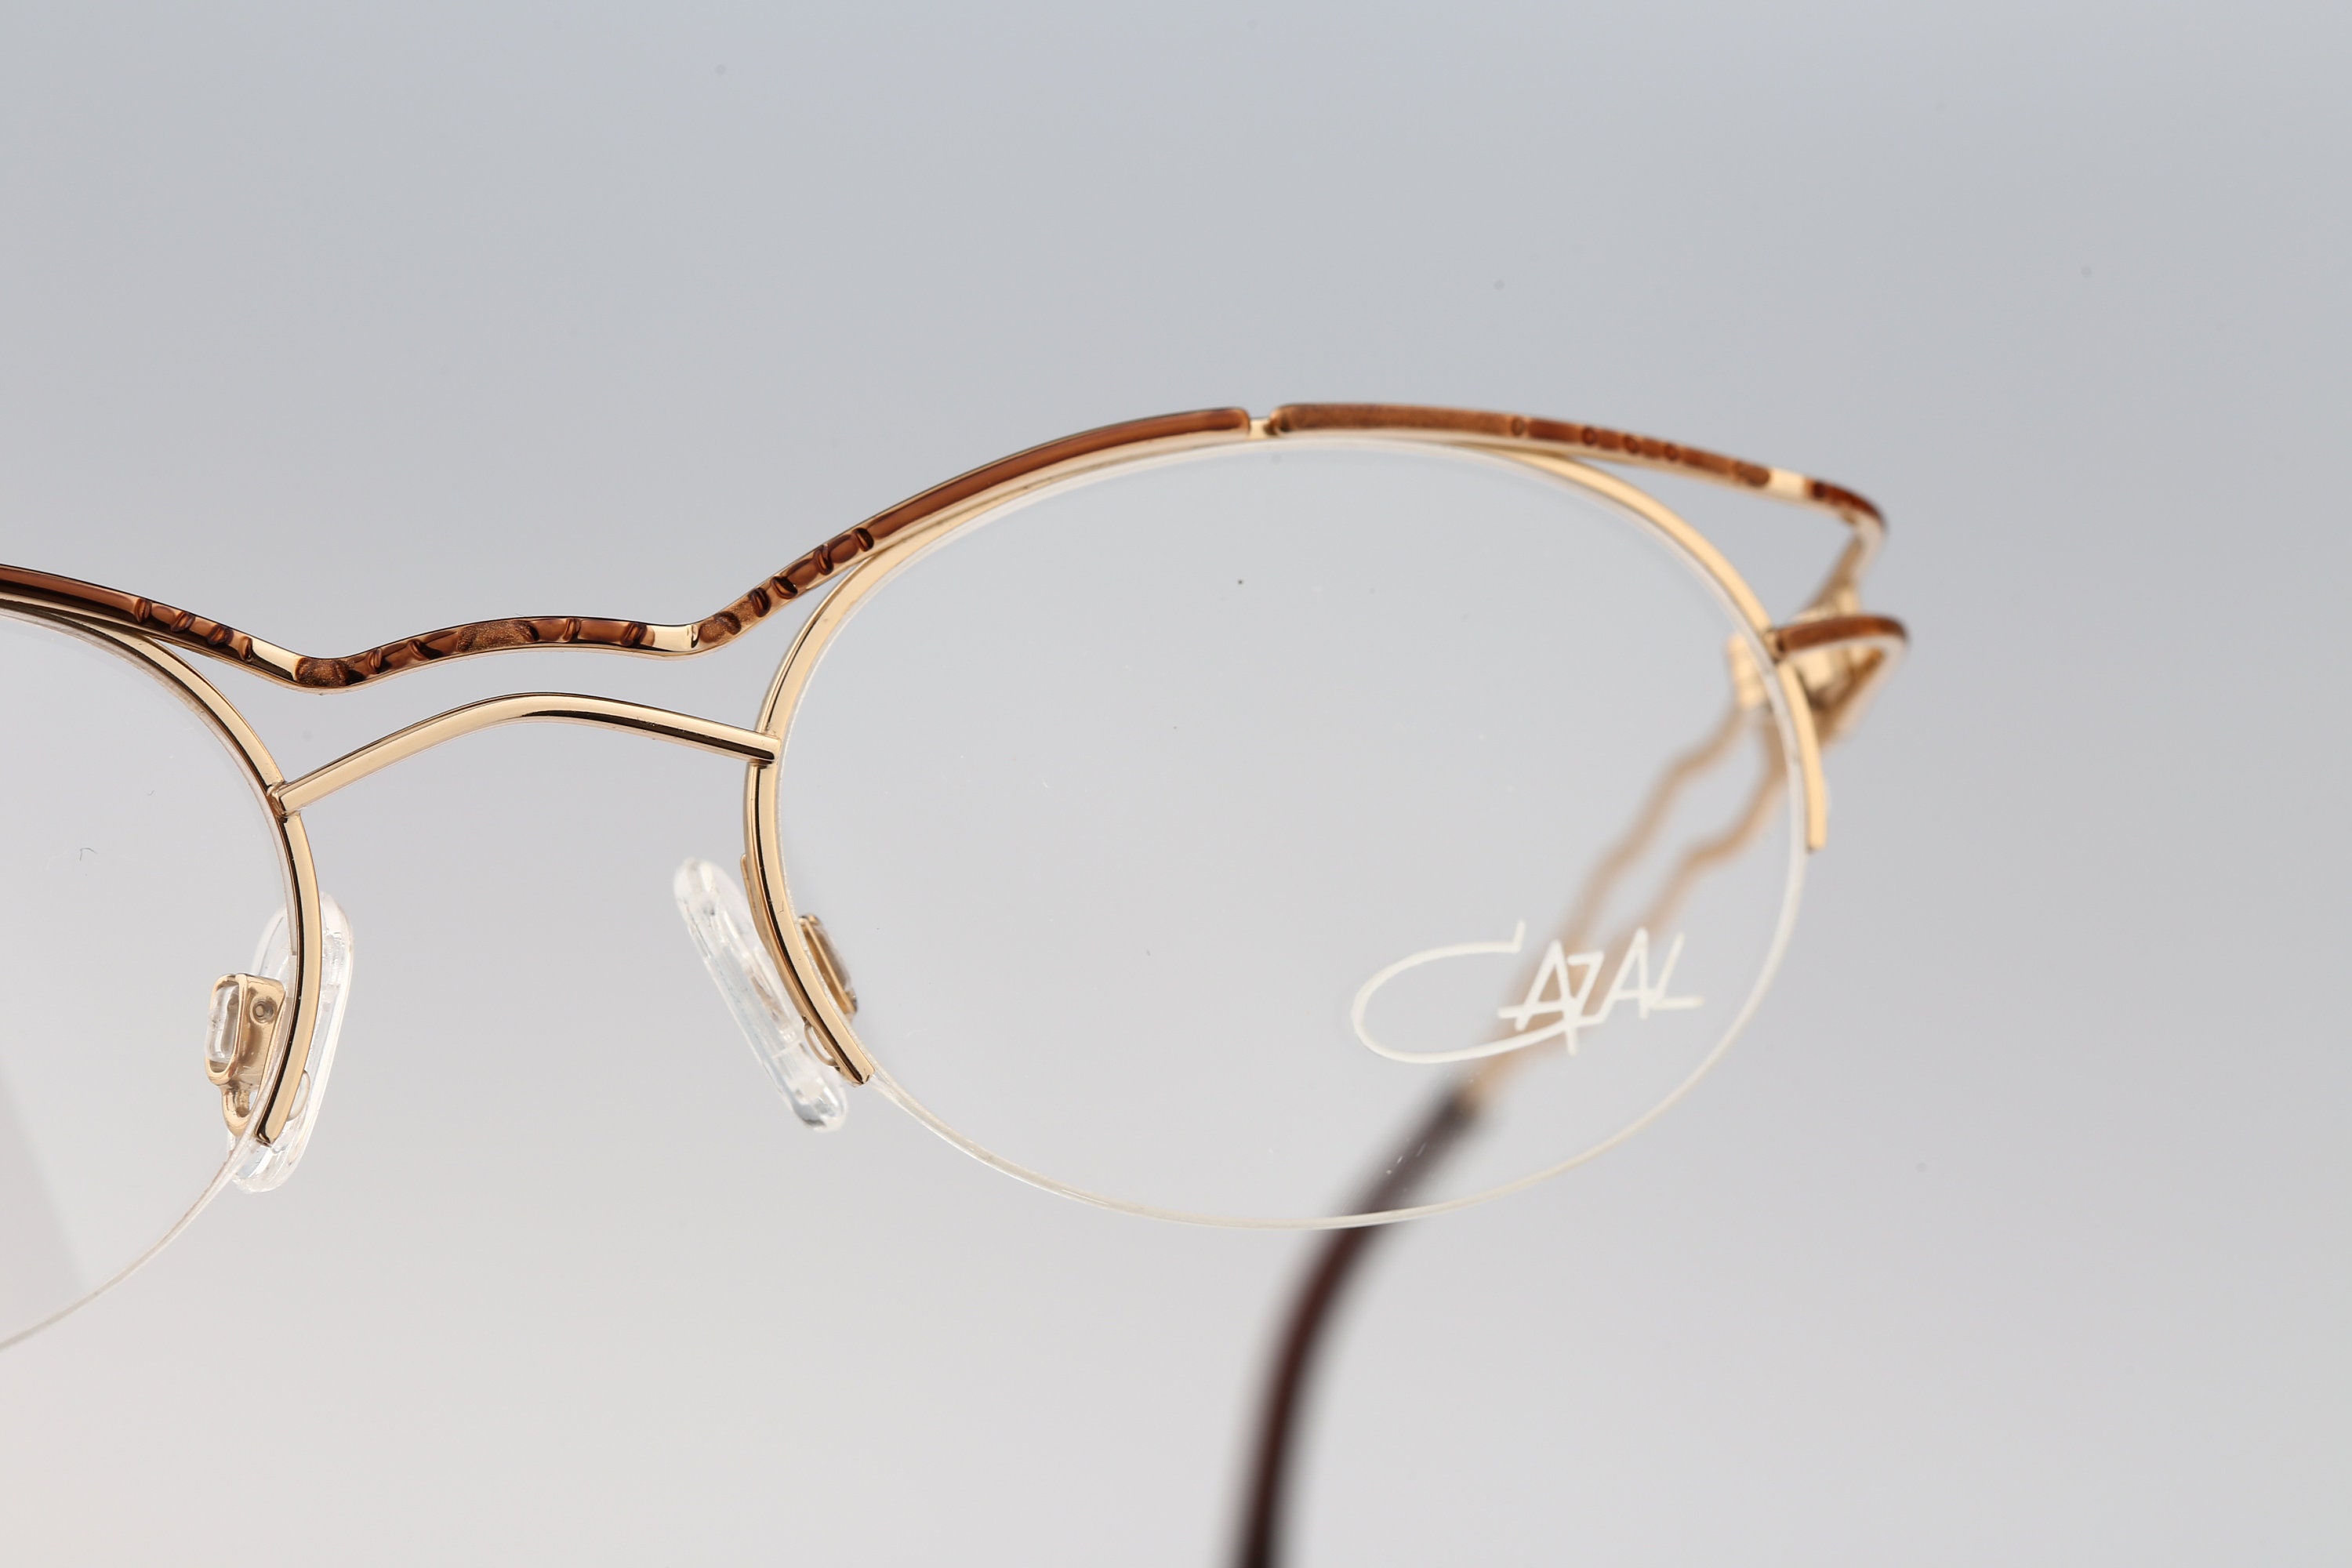 Vintage Metall Cazal randlose Brille Frames Made in Germany super 